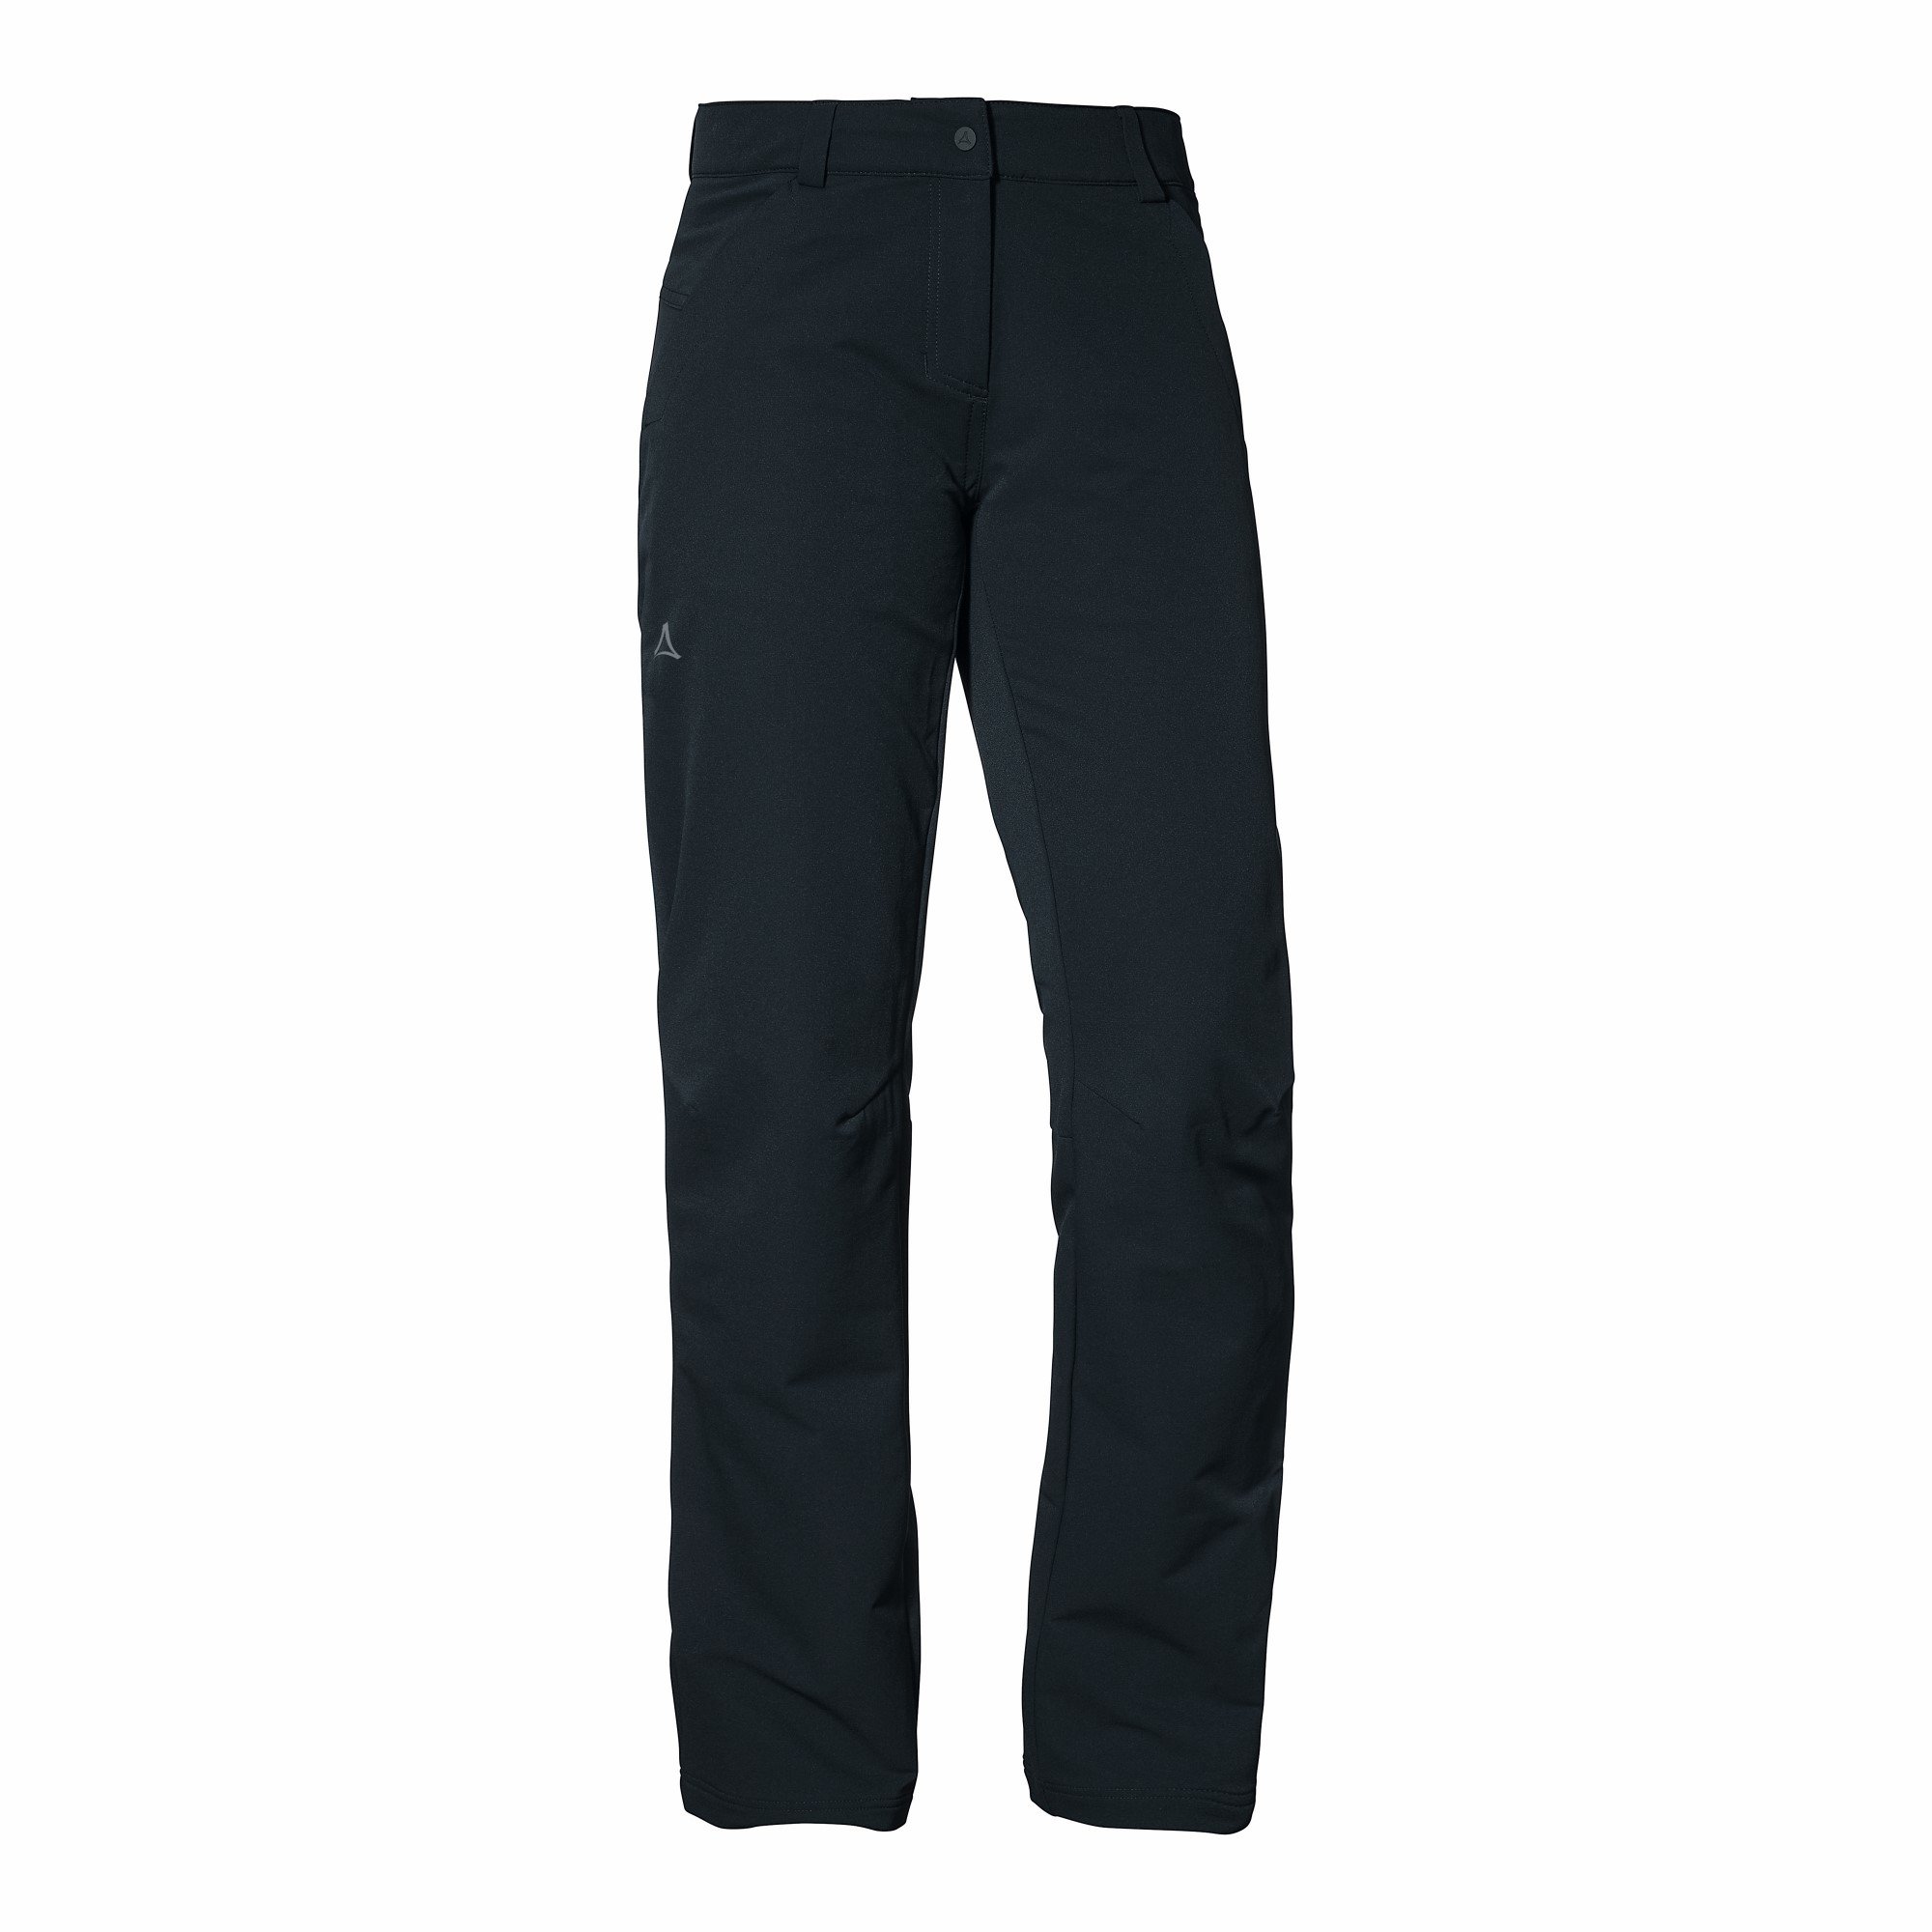 SCHÖFFEL Pants Serriera L DAMEN black (13108_9990), 72,00 €